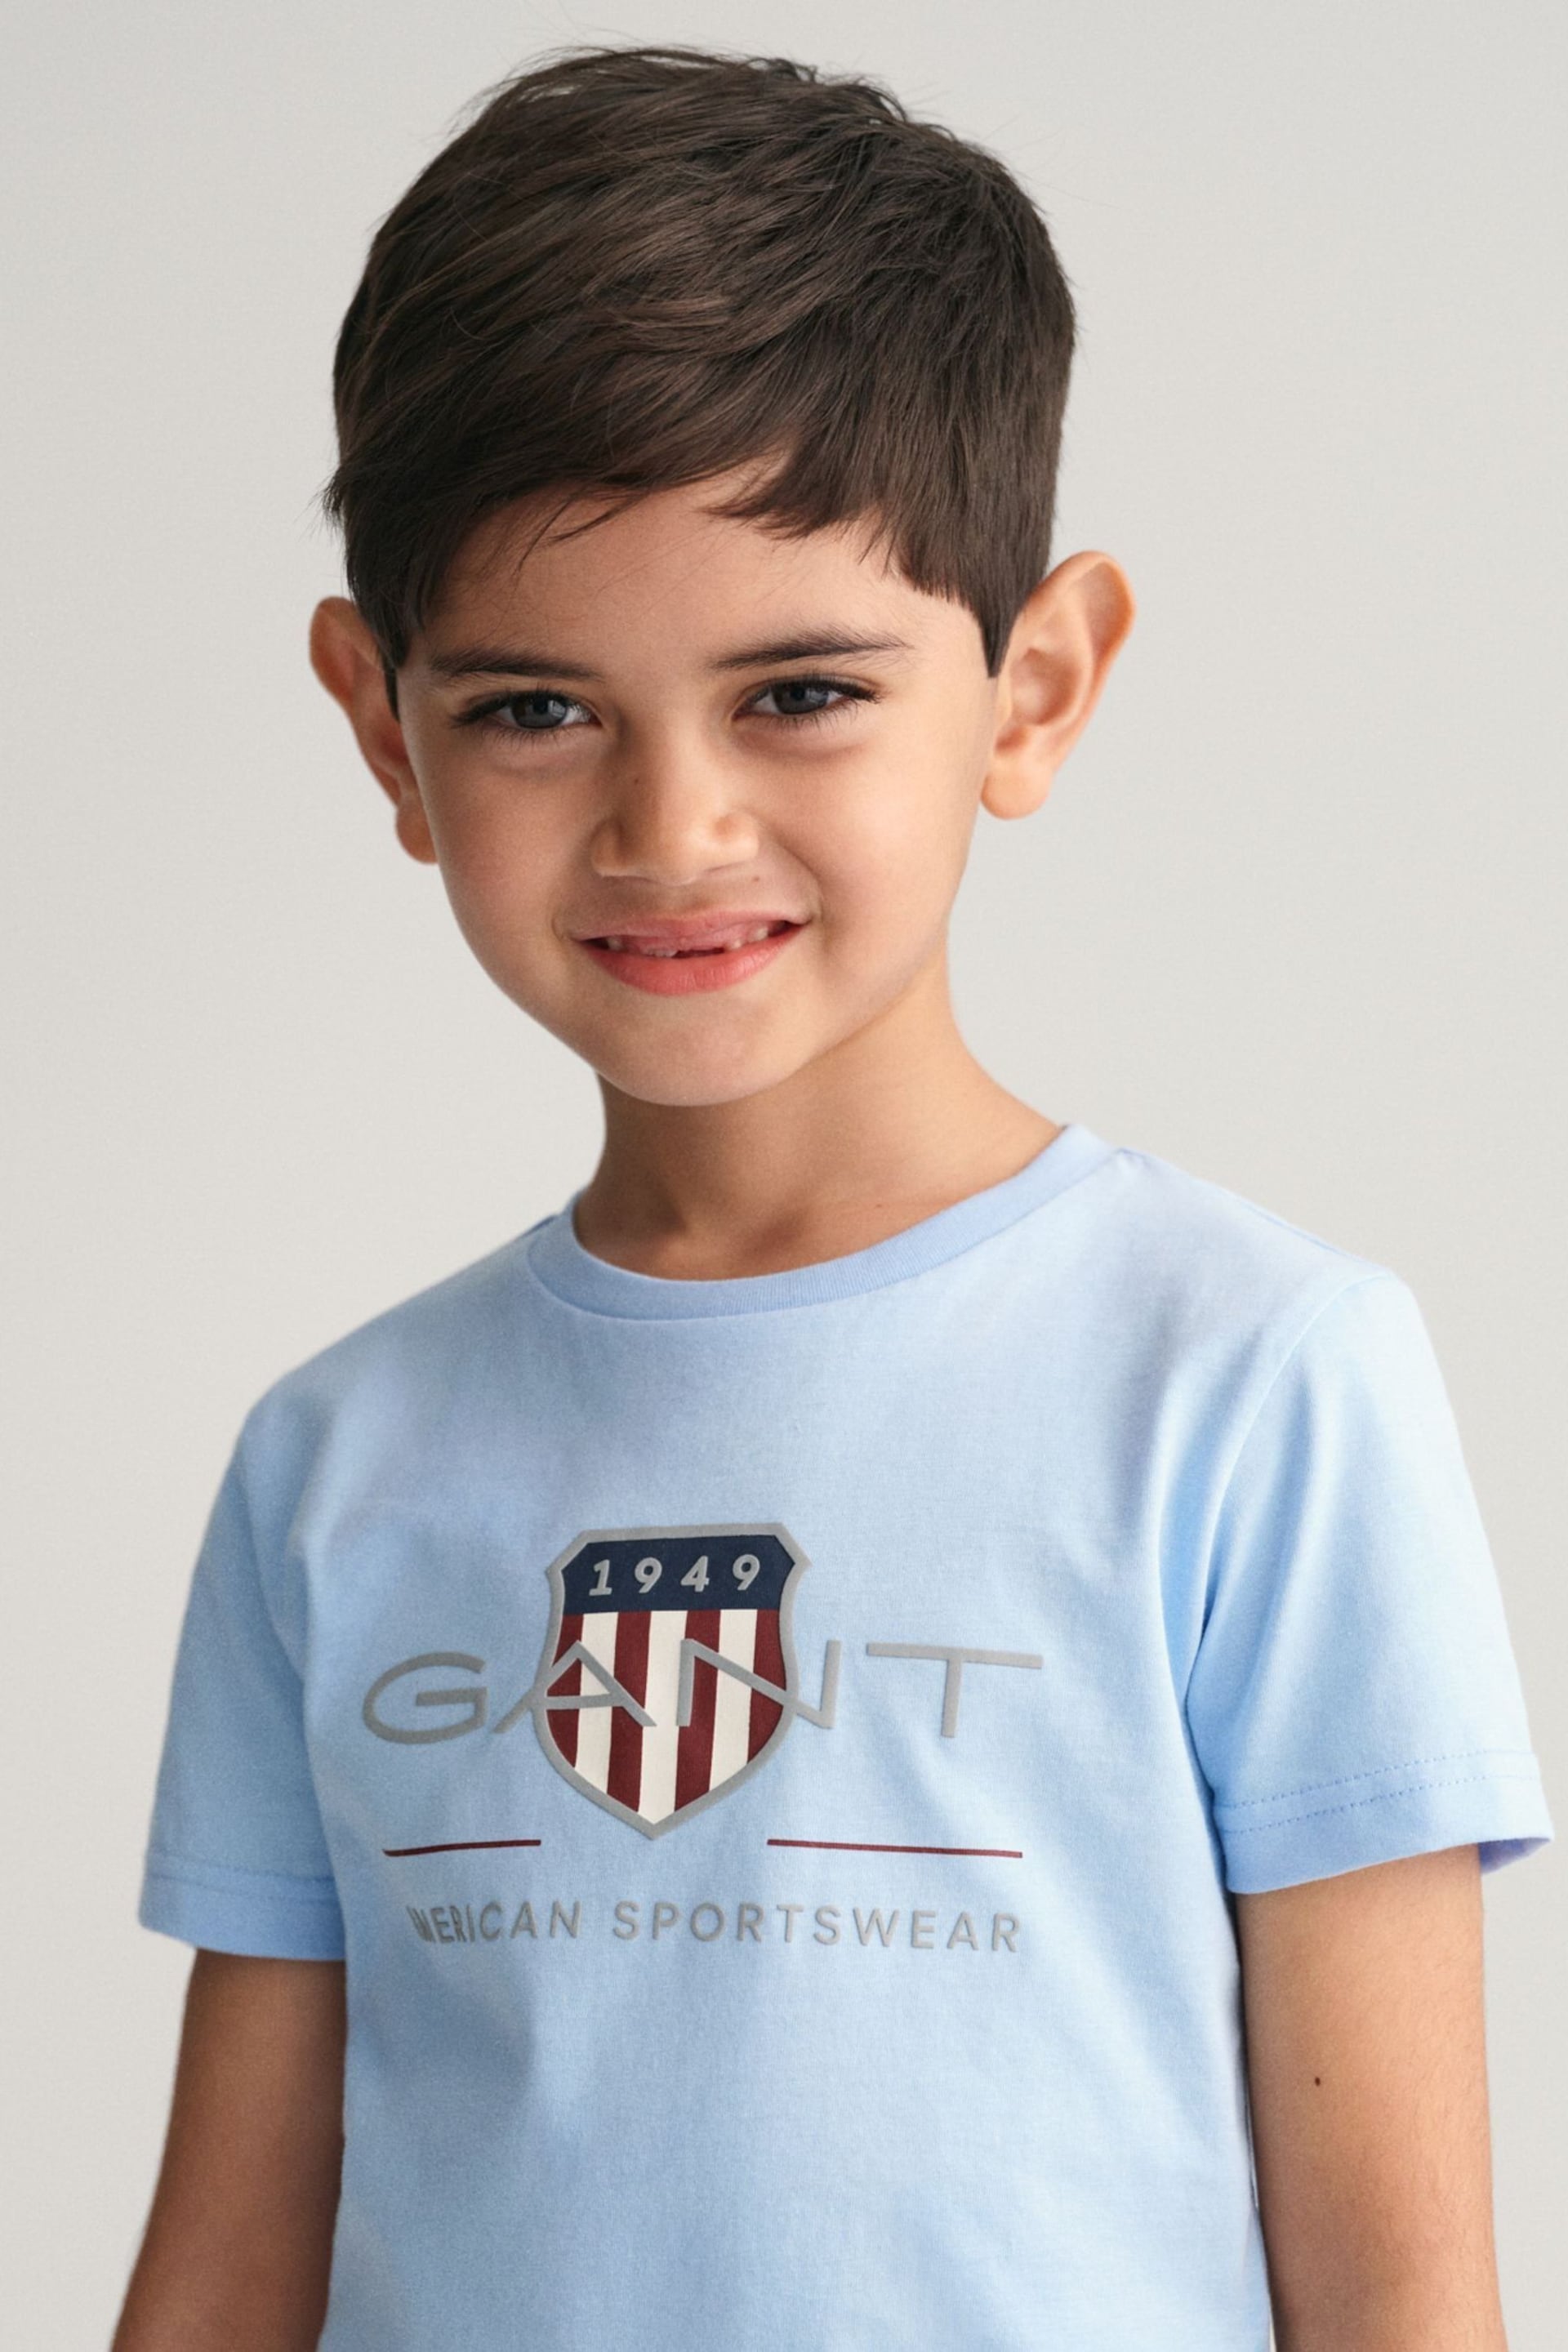 GANT Kids Archive Shield T-Shirt - Image 4 of 6